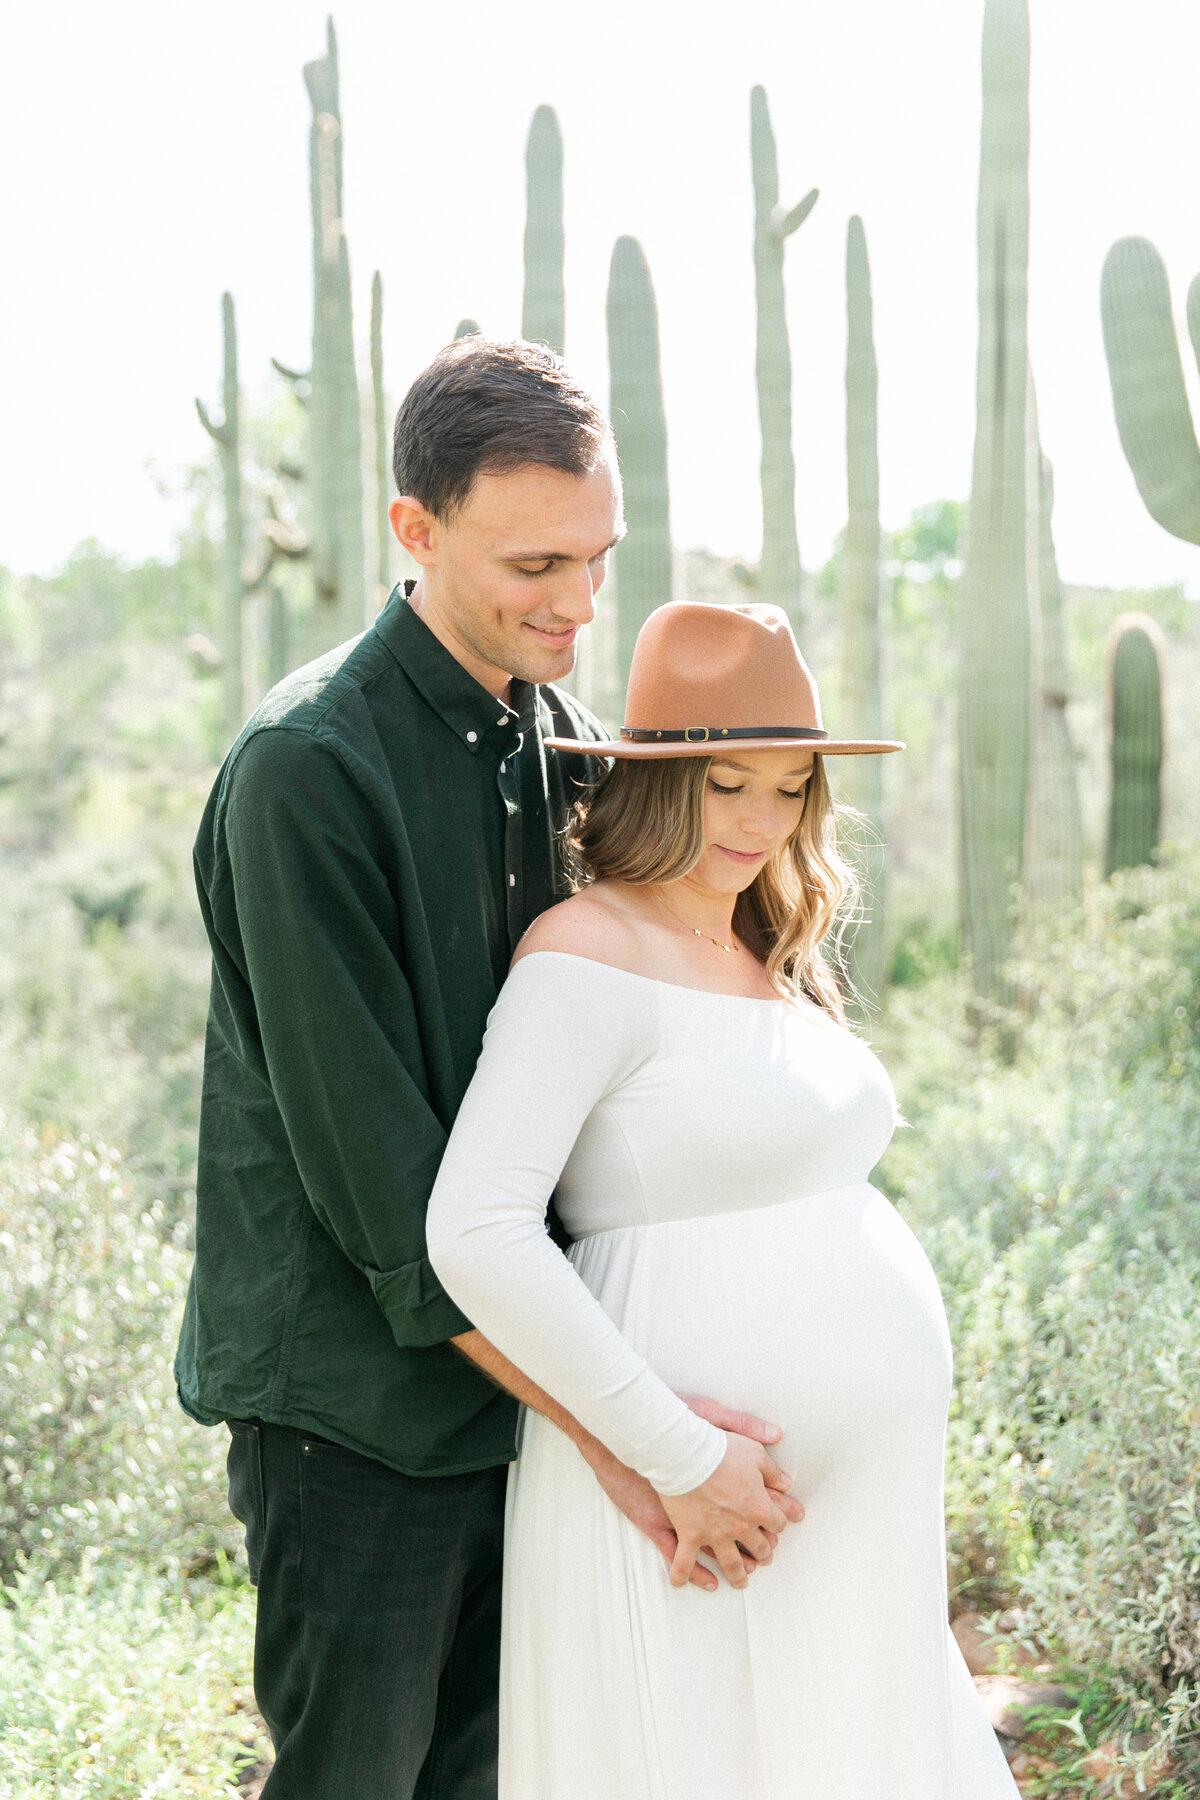 Karlie Colleen Photography - Scottsdale Arizona Maternity Photographer - Kylie & Troy-26